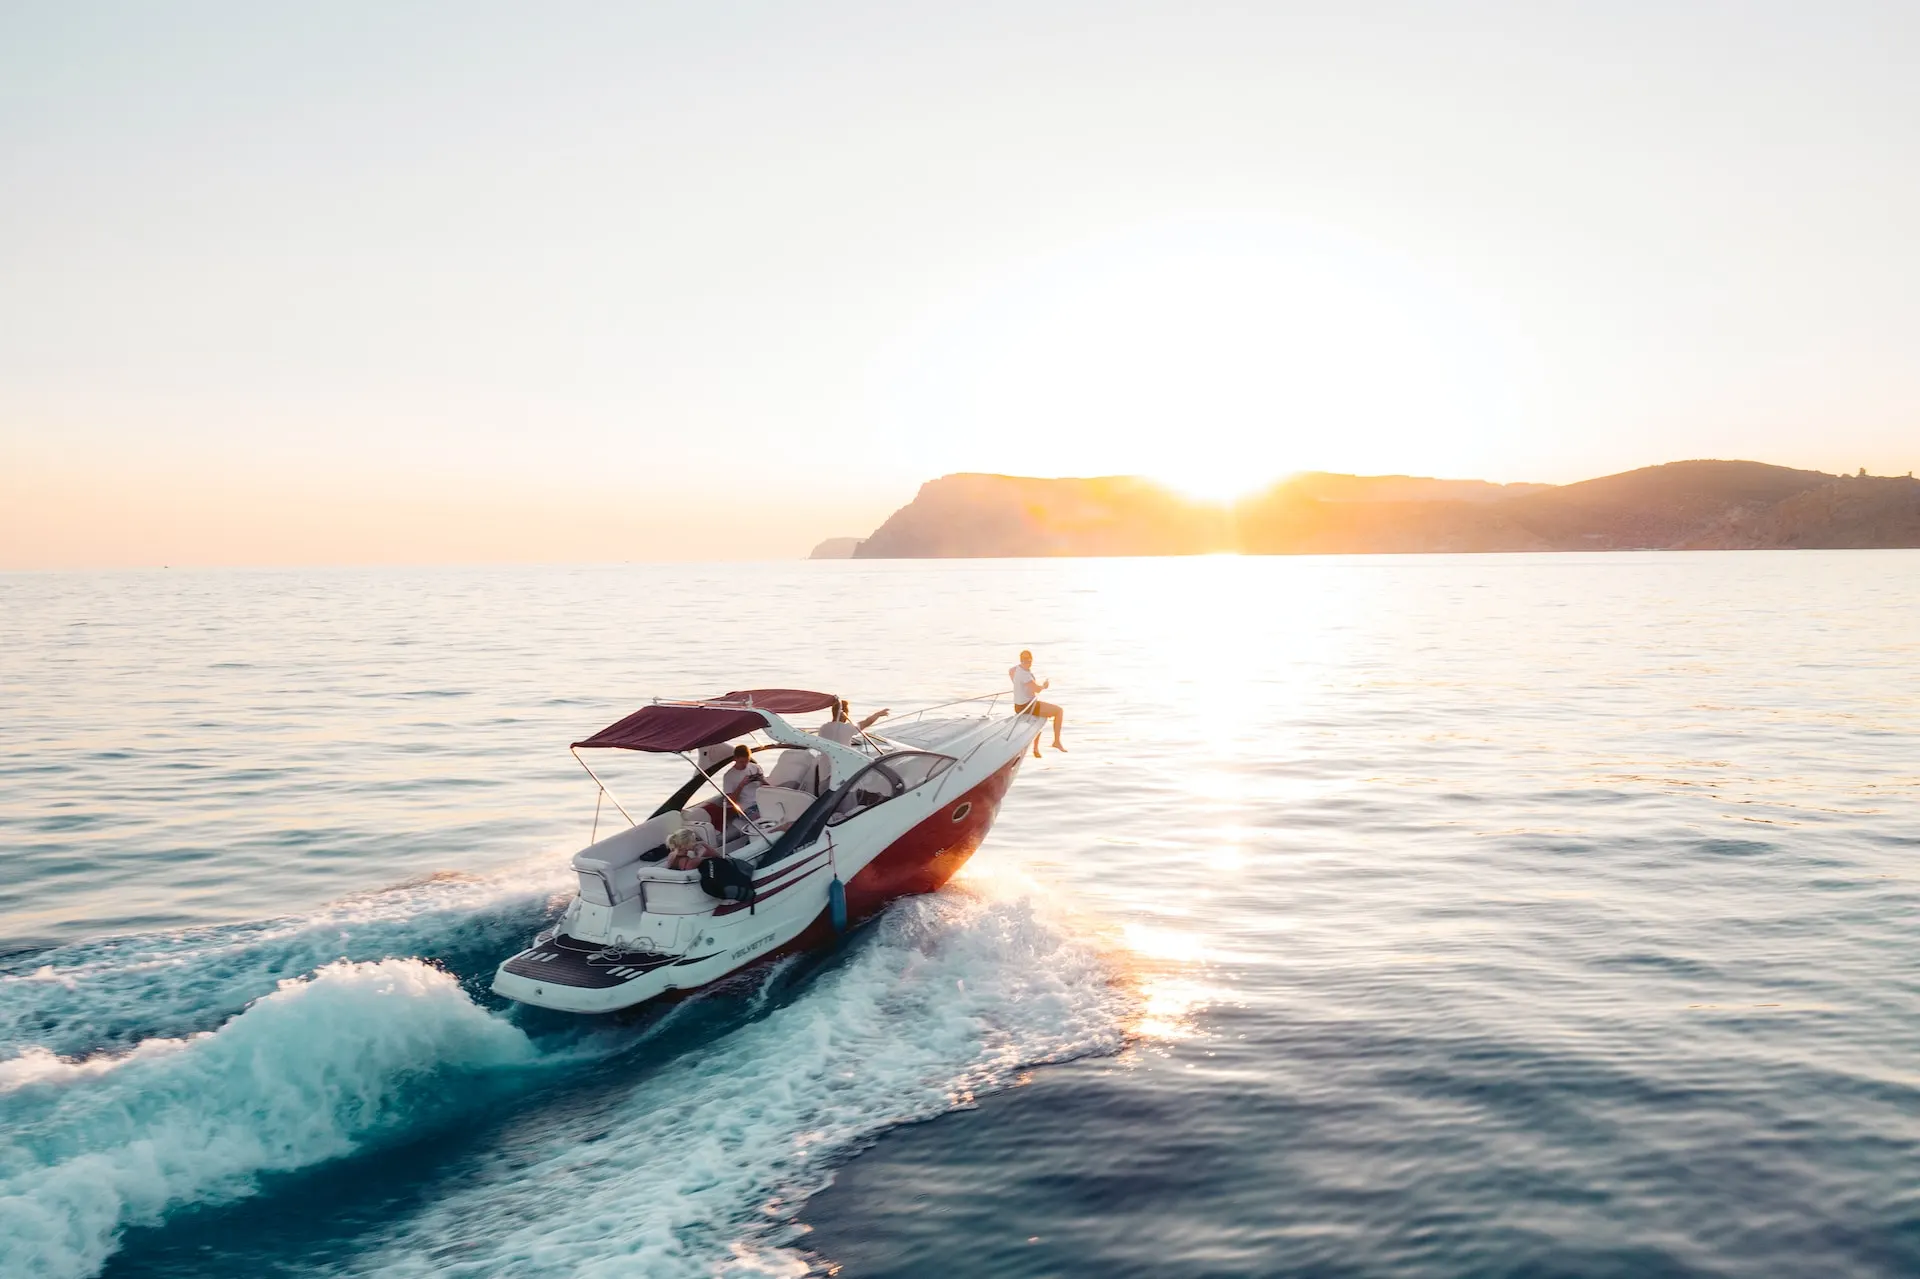 yacht rental houston airbnb